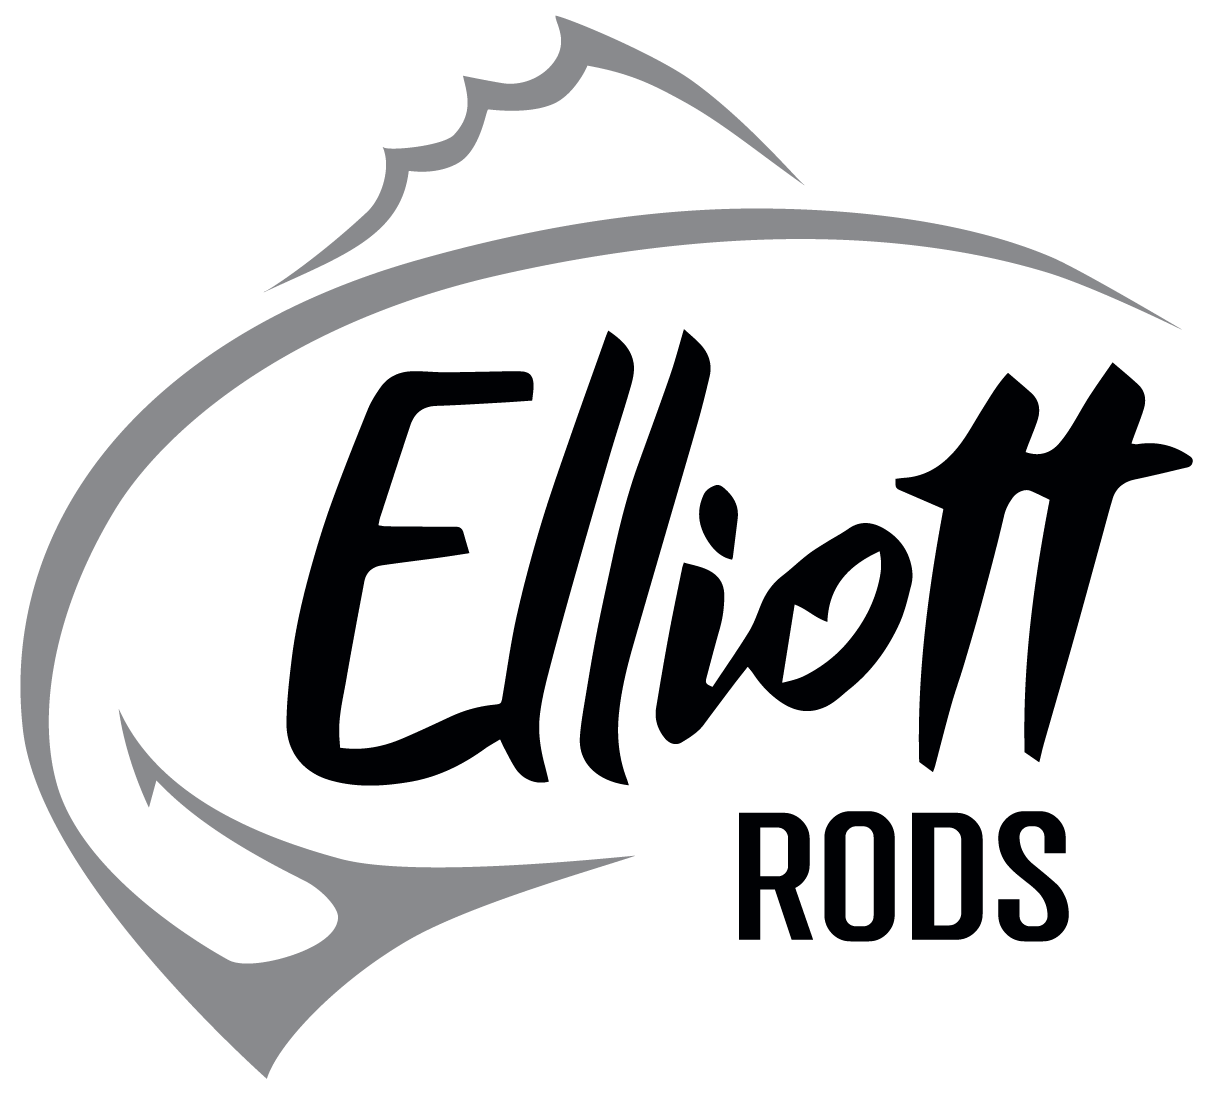 https://twobrothersinnovations.com/wp-content/uploads/2018/12/cropped-ElliottRods_logo_RGB-01-1.png